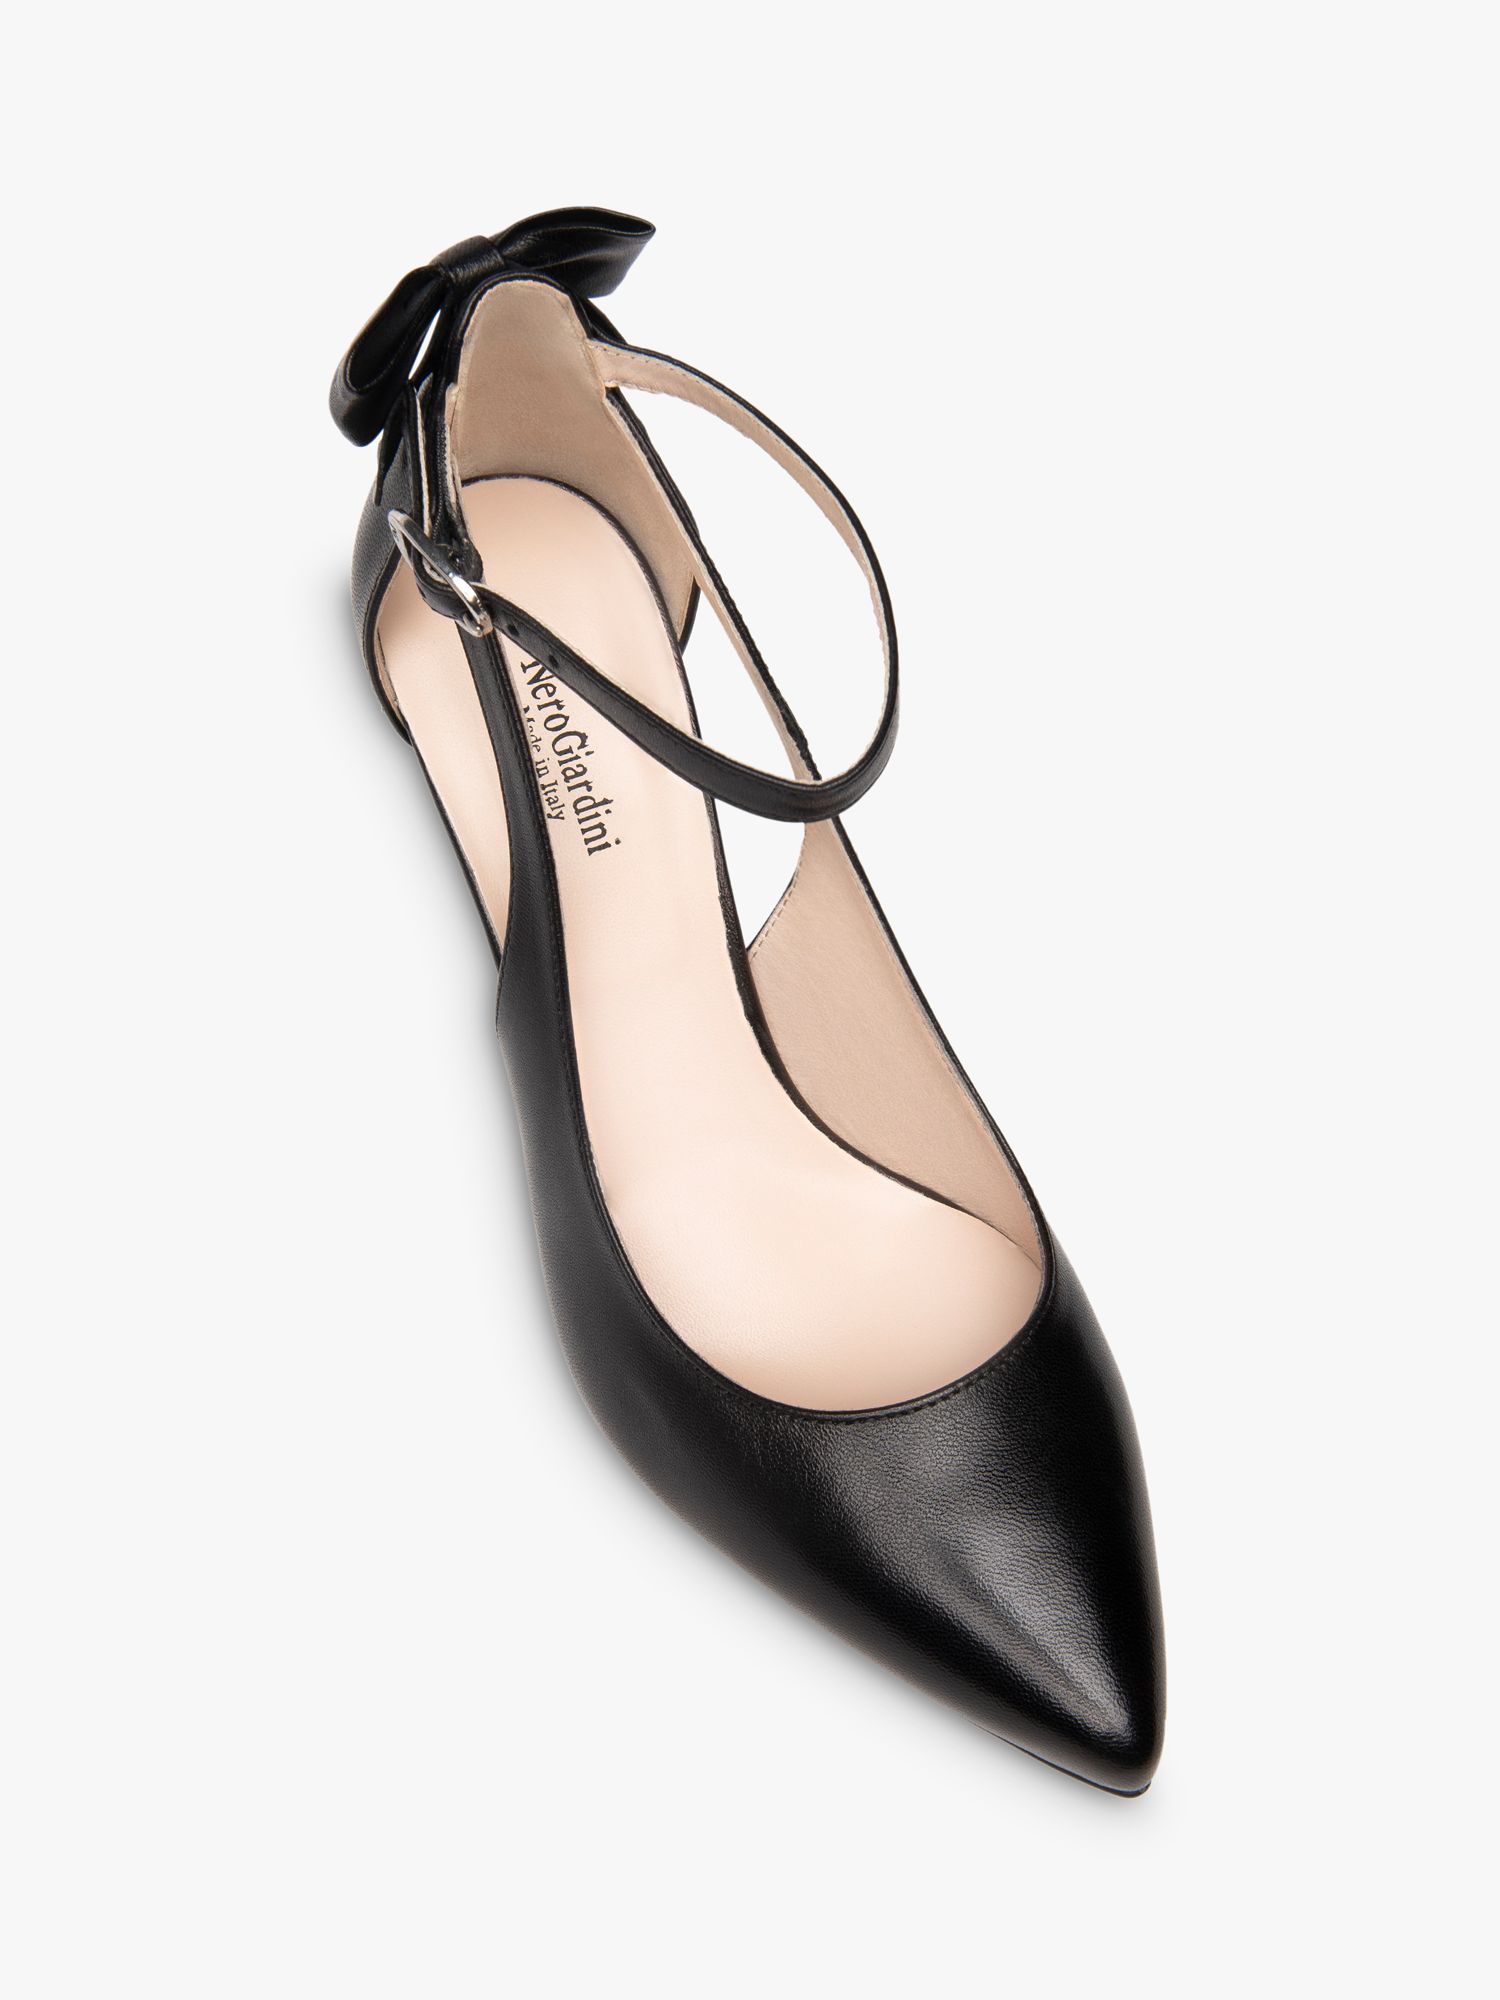 NeroGiardini Leather Bow Court Shoes, Black, 3